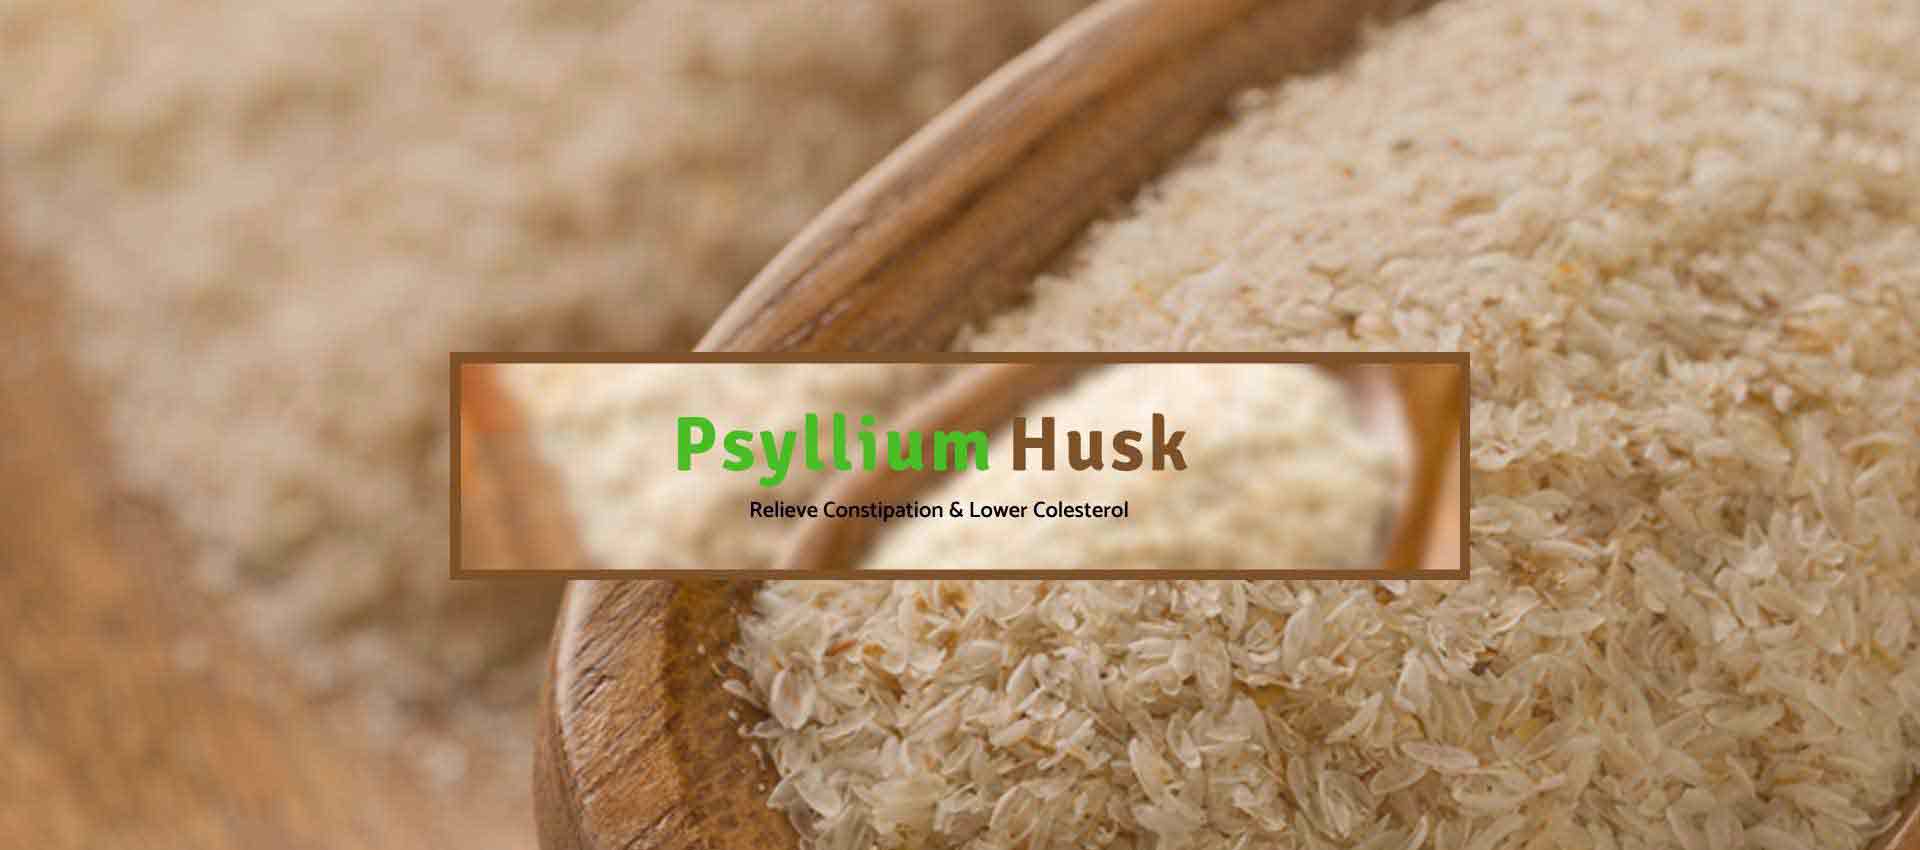 Psyllium Husk Manufacturers in Mexico